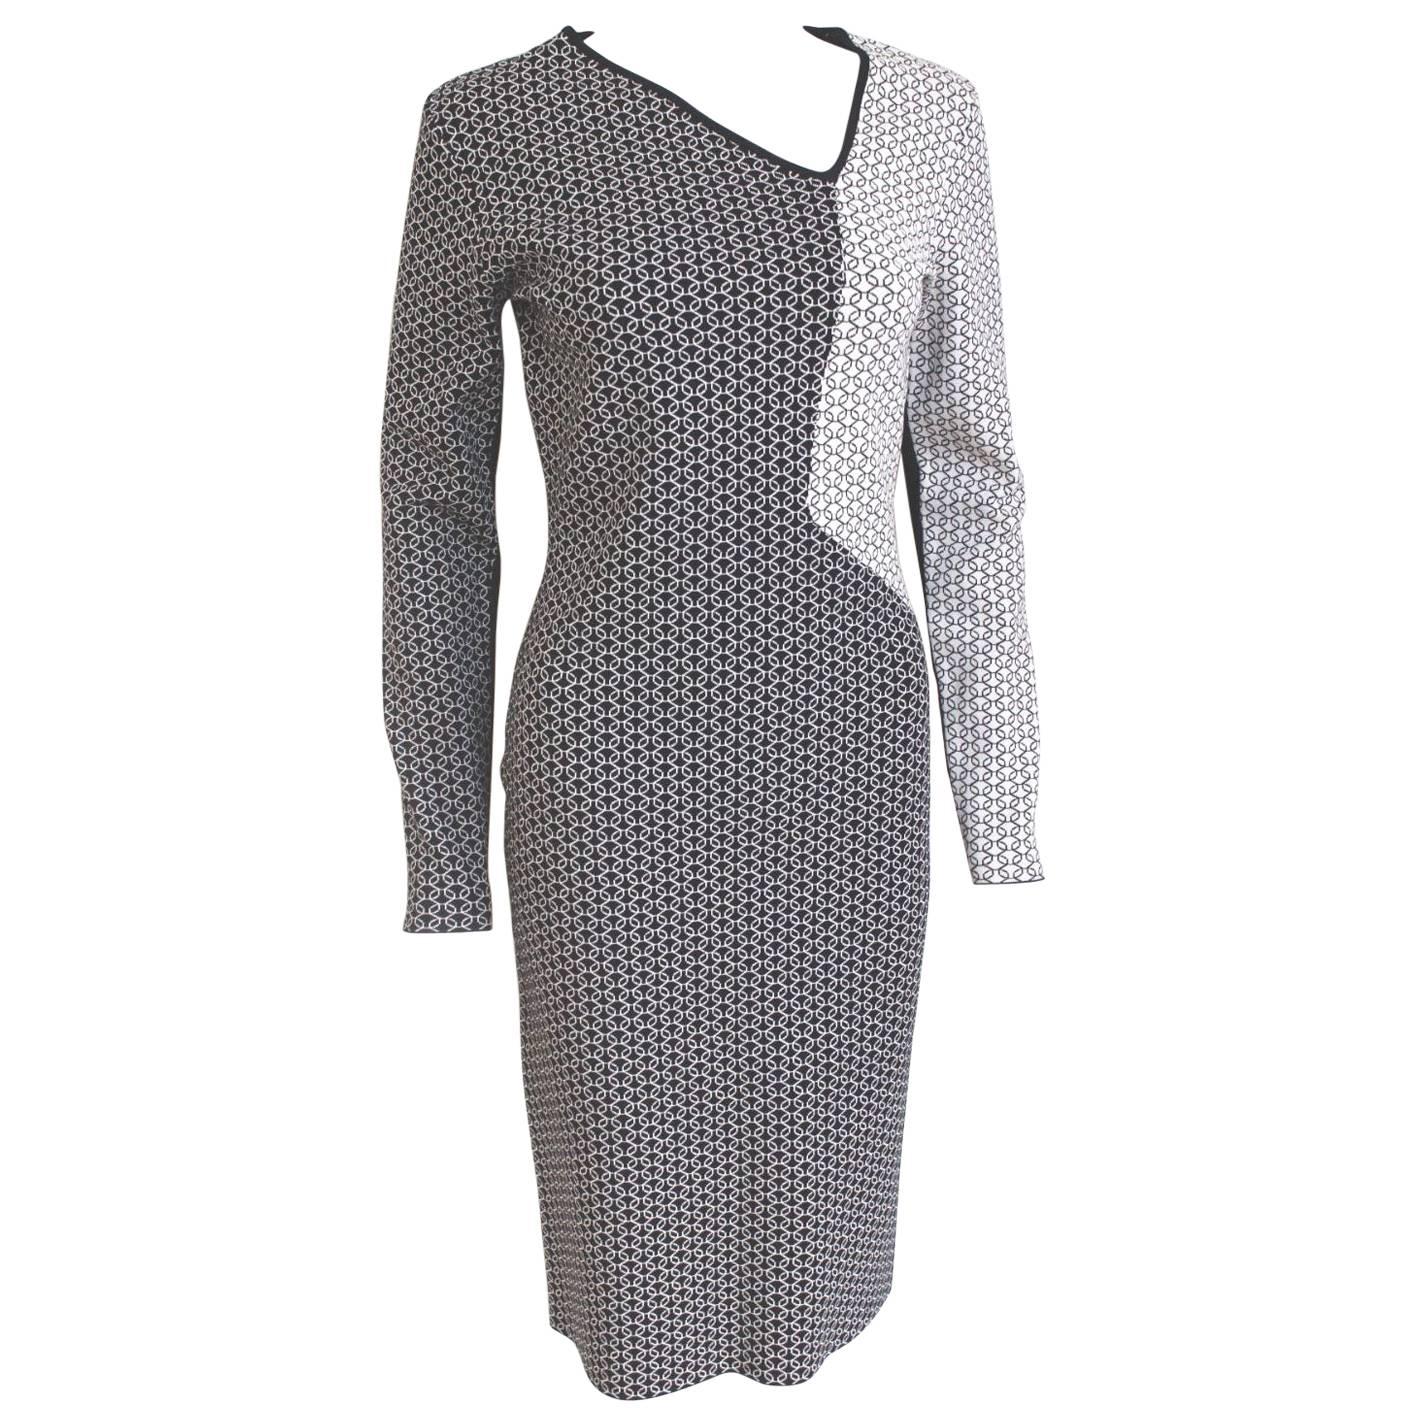 Roland Mouret "Nassau" dress in chain birdseye jacquard knit Dress M For Sale